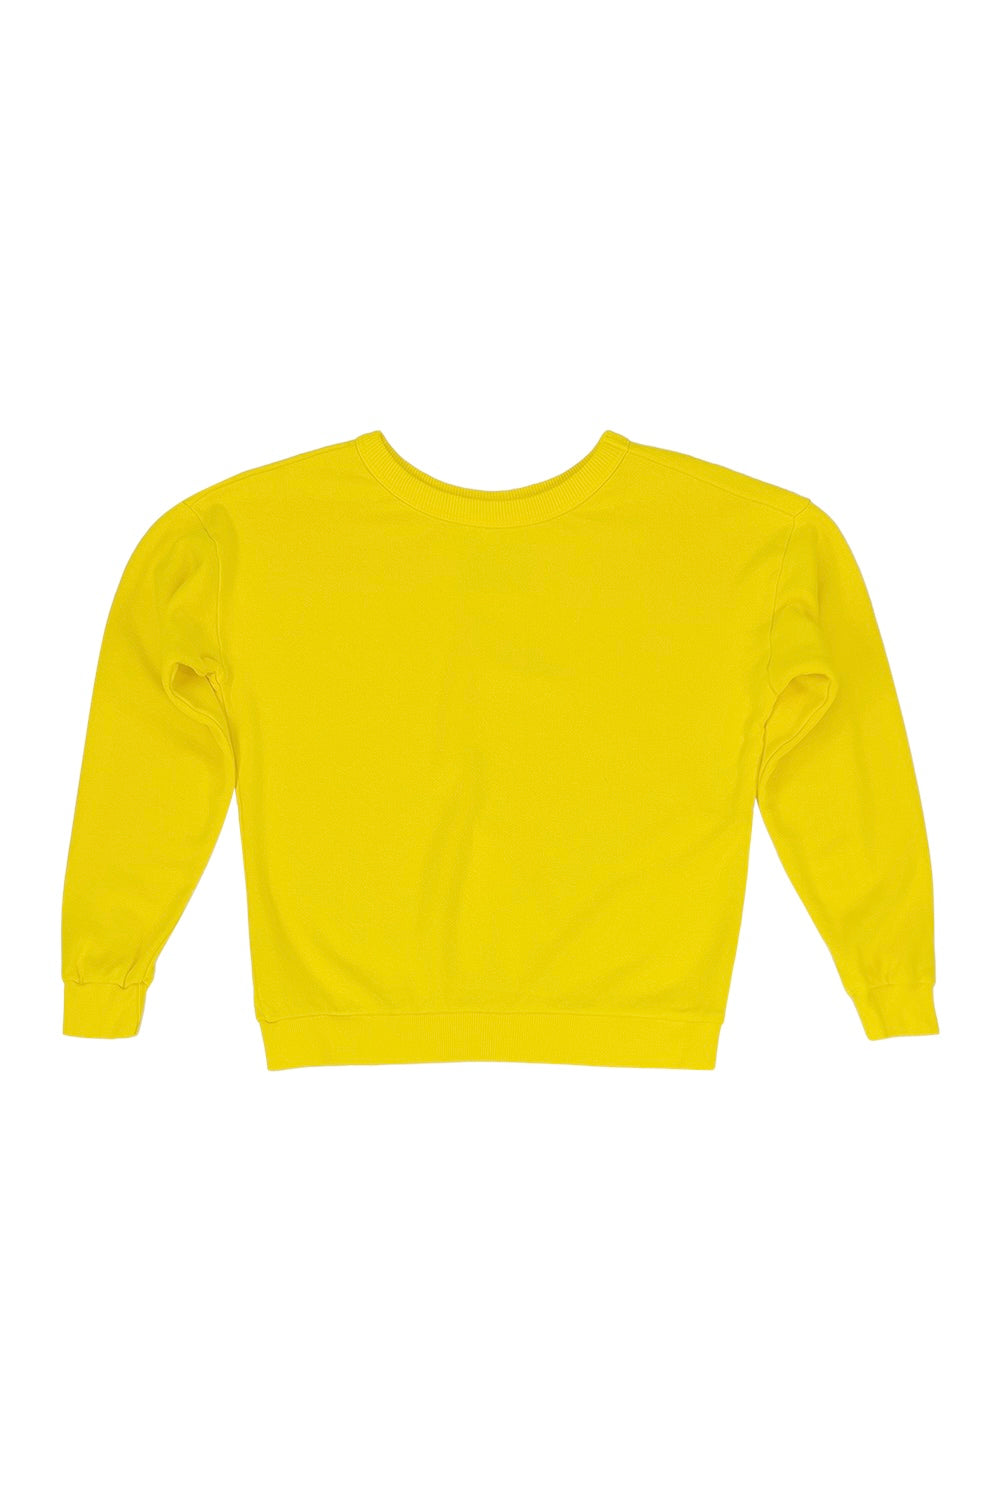 Crux Cropped Sweatshirt | Jungmaven Hemp Clothing & Accessories / Color: Sunshine Yellow